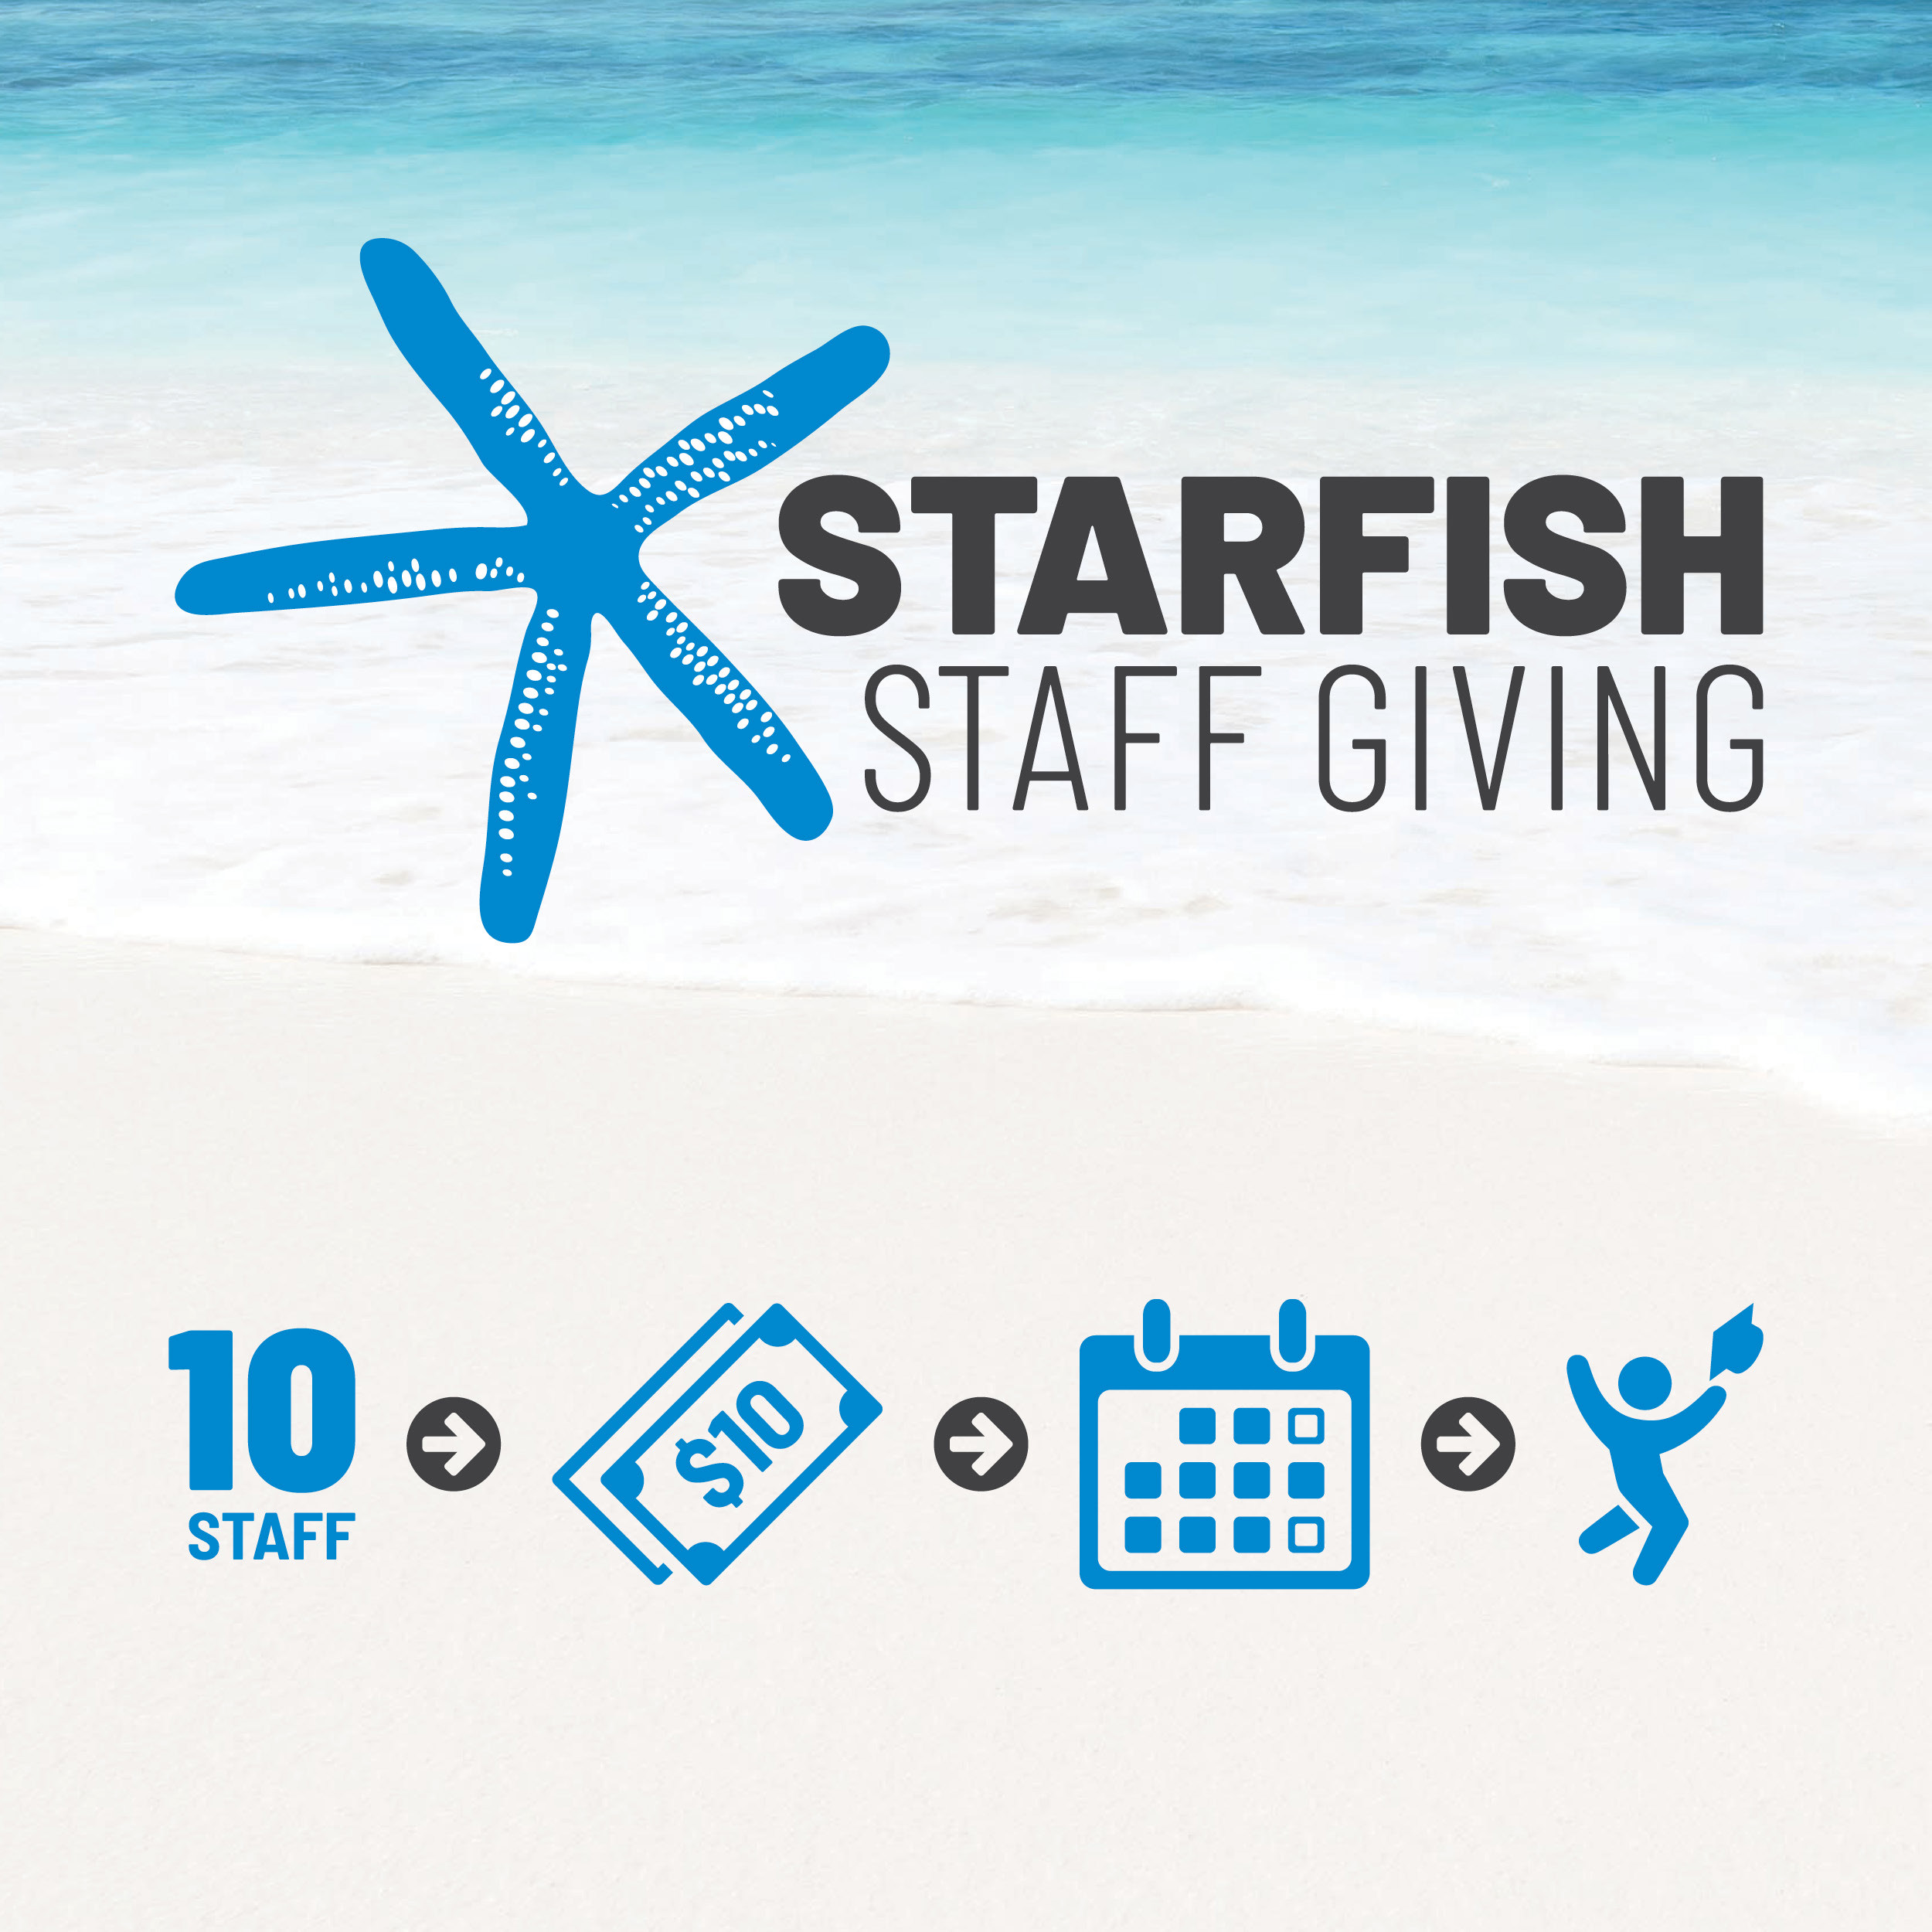 starfish staff giving program infographic